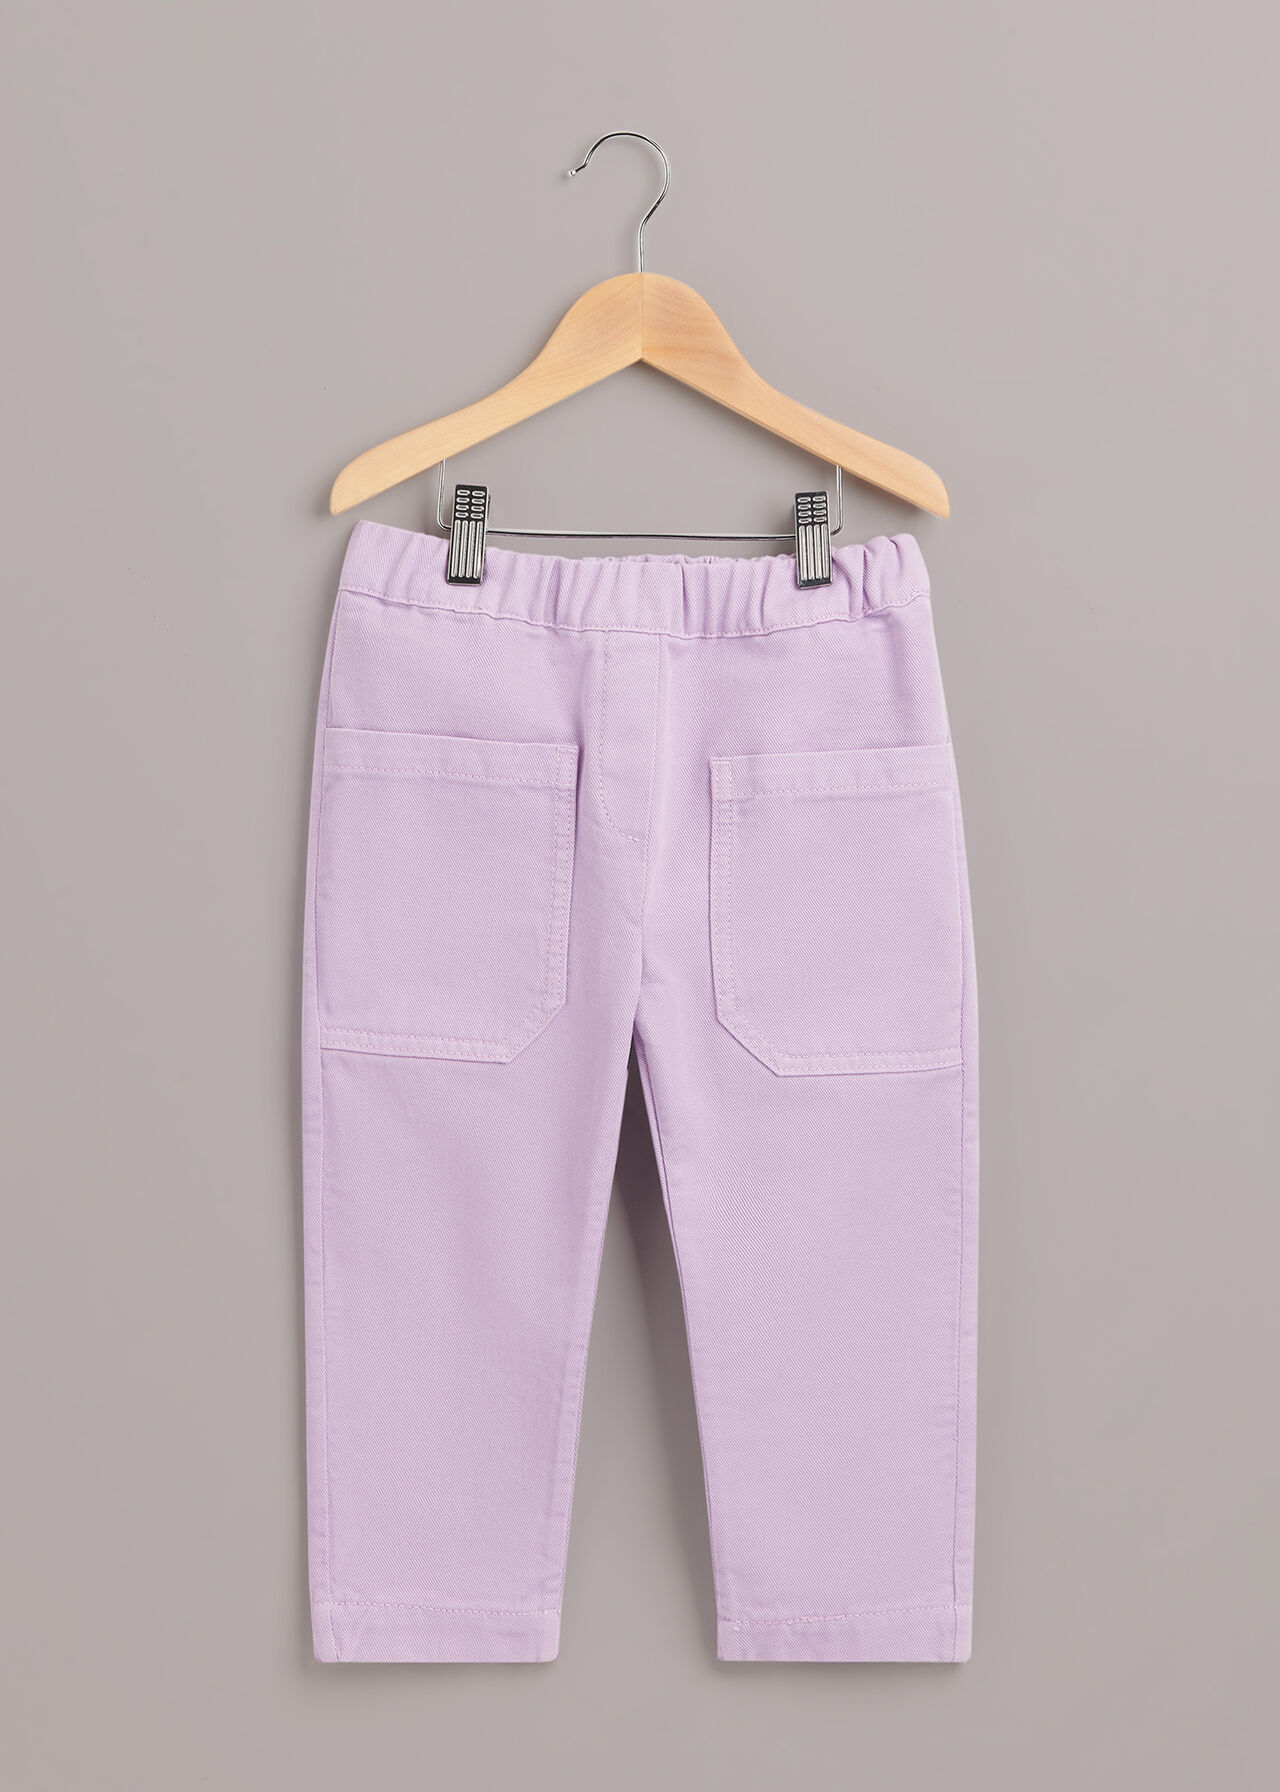 Flo Multi Stitched Trouser